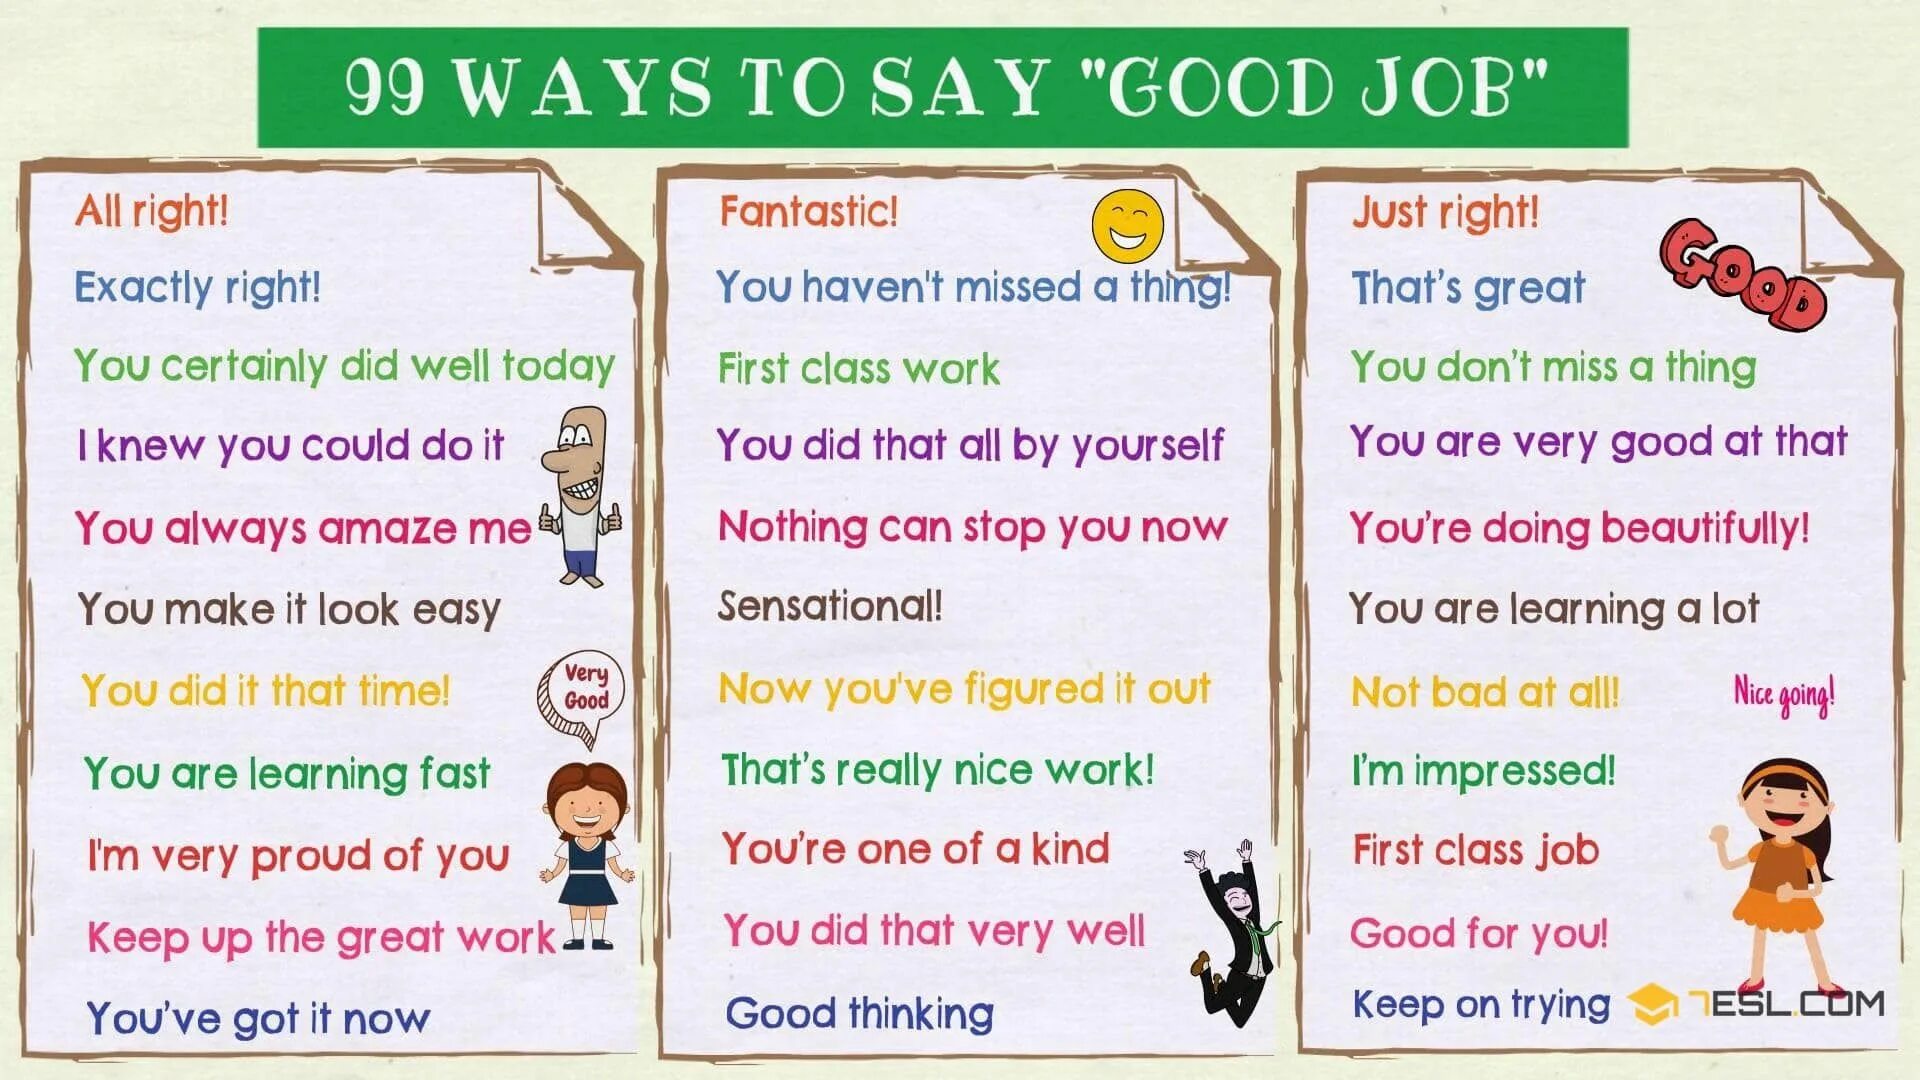 That s really good. Good job синонимы. Ways to say good job. Ways to say great. Great синонимы на английском.